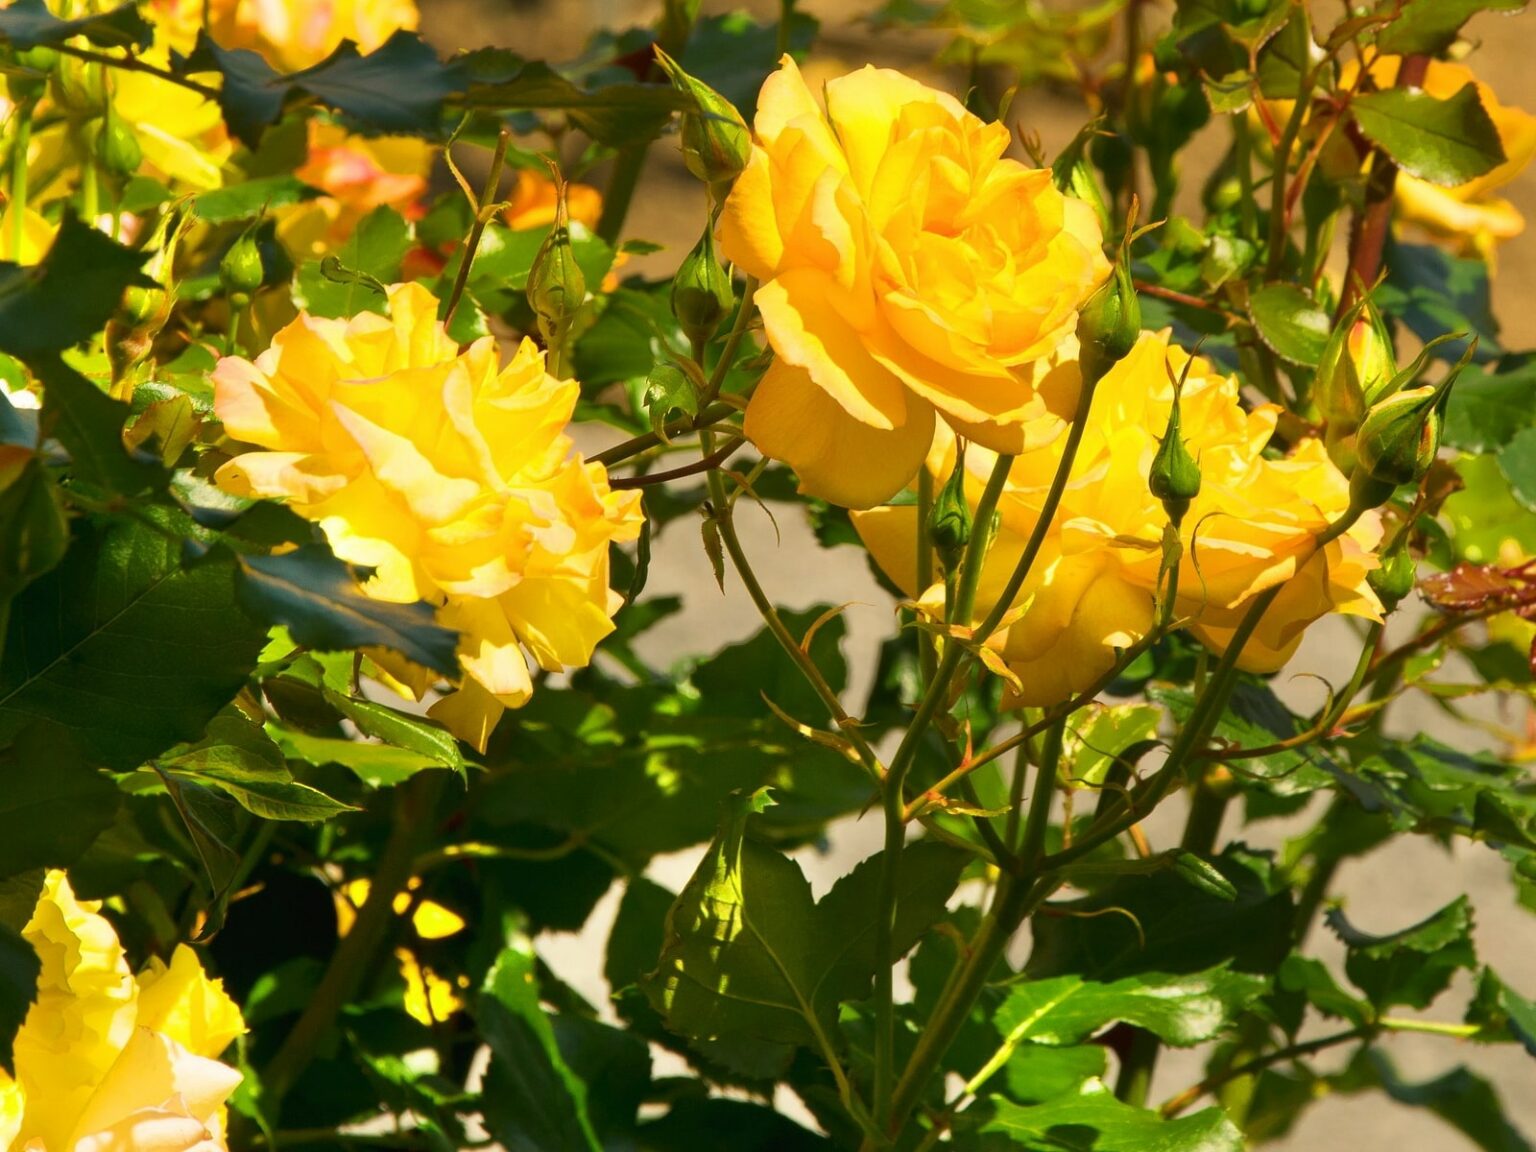 Роза пенни лейн желтая фото и описание